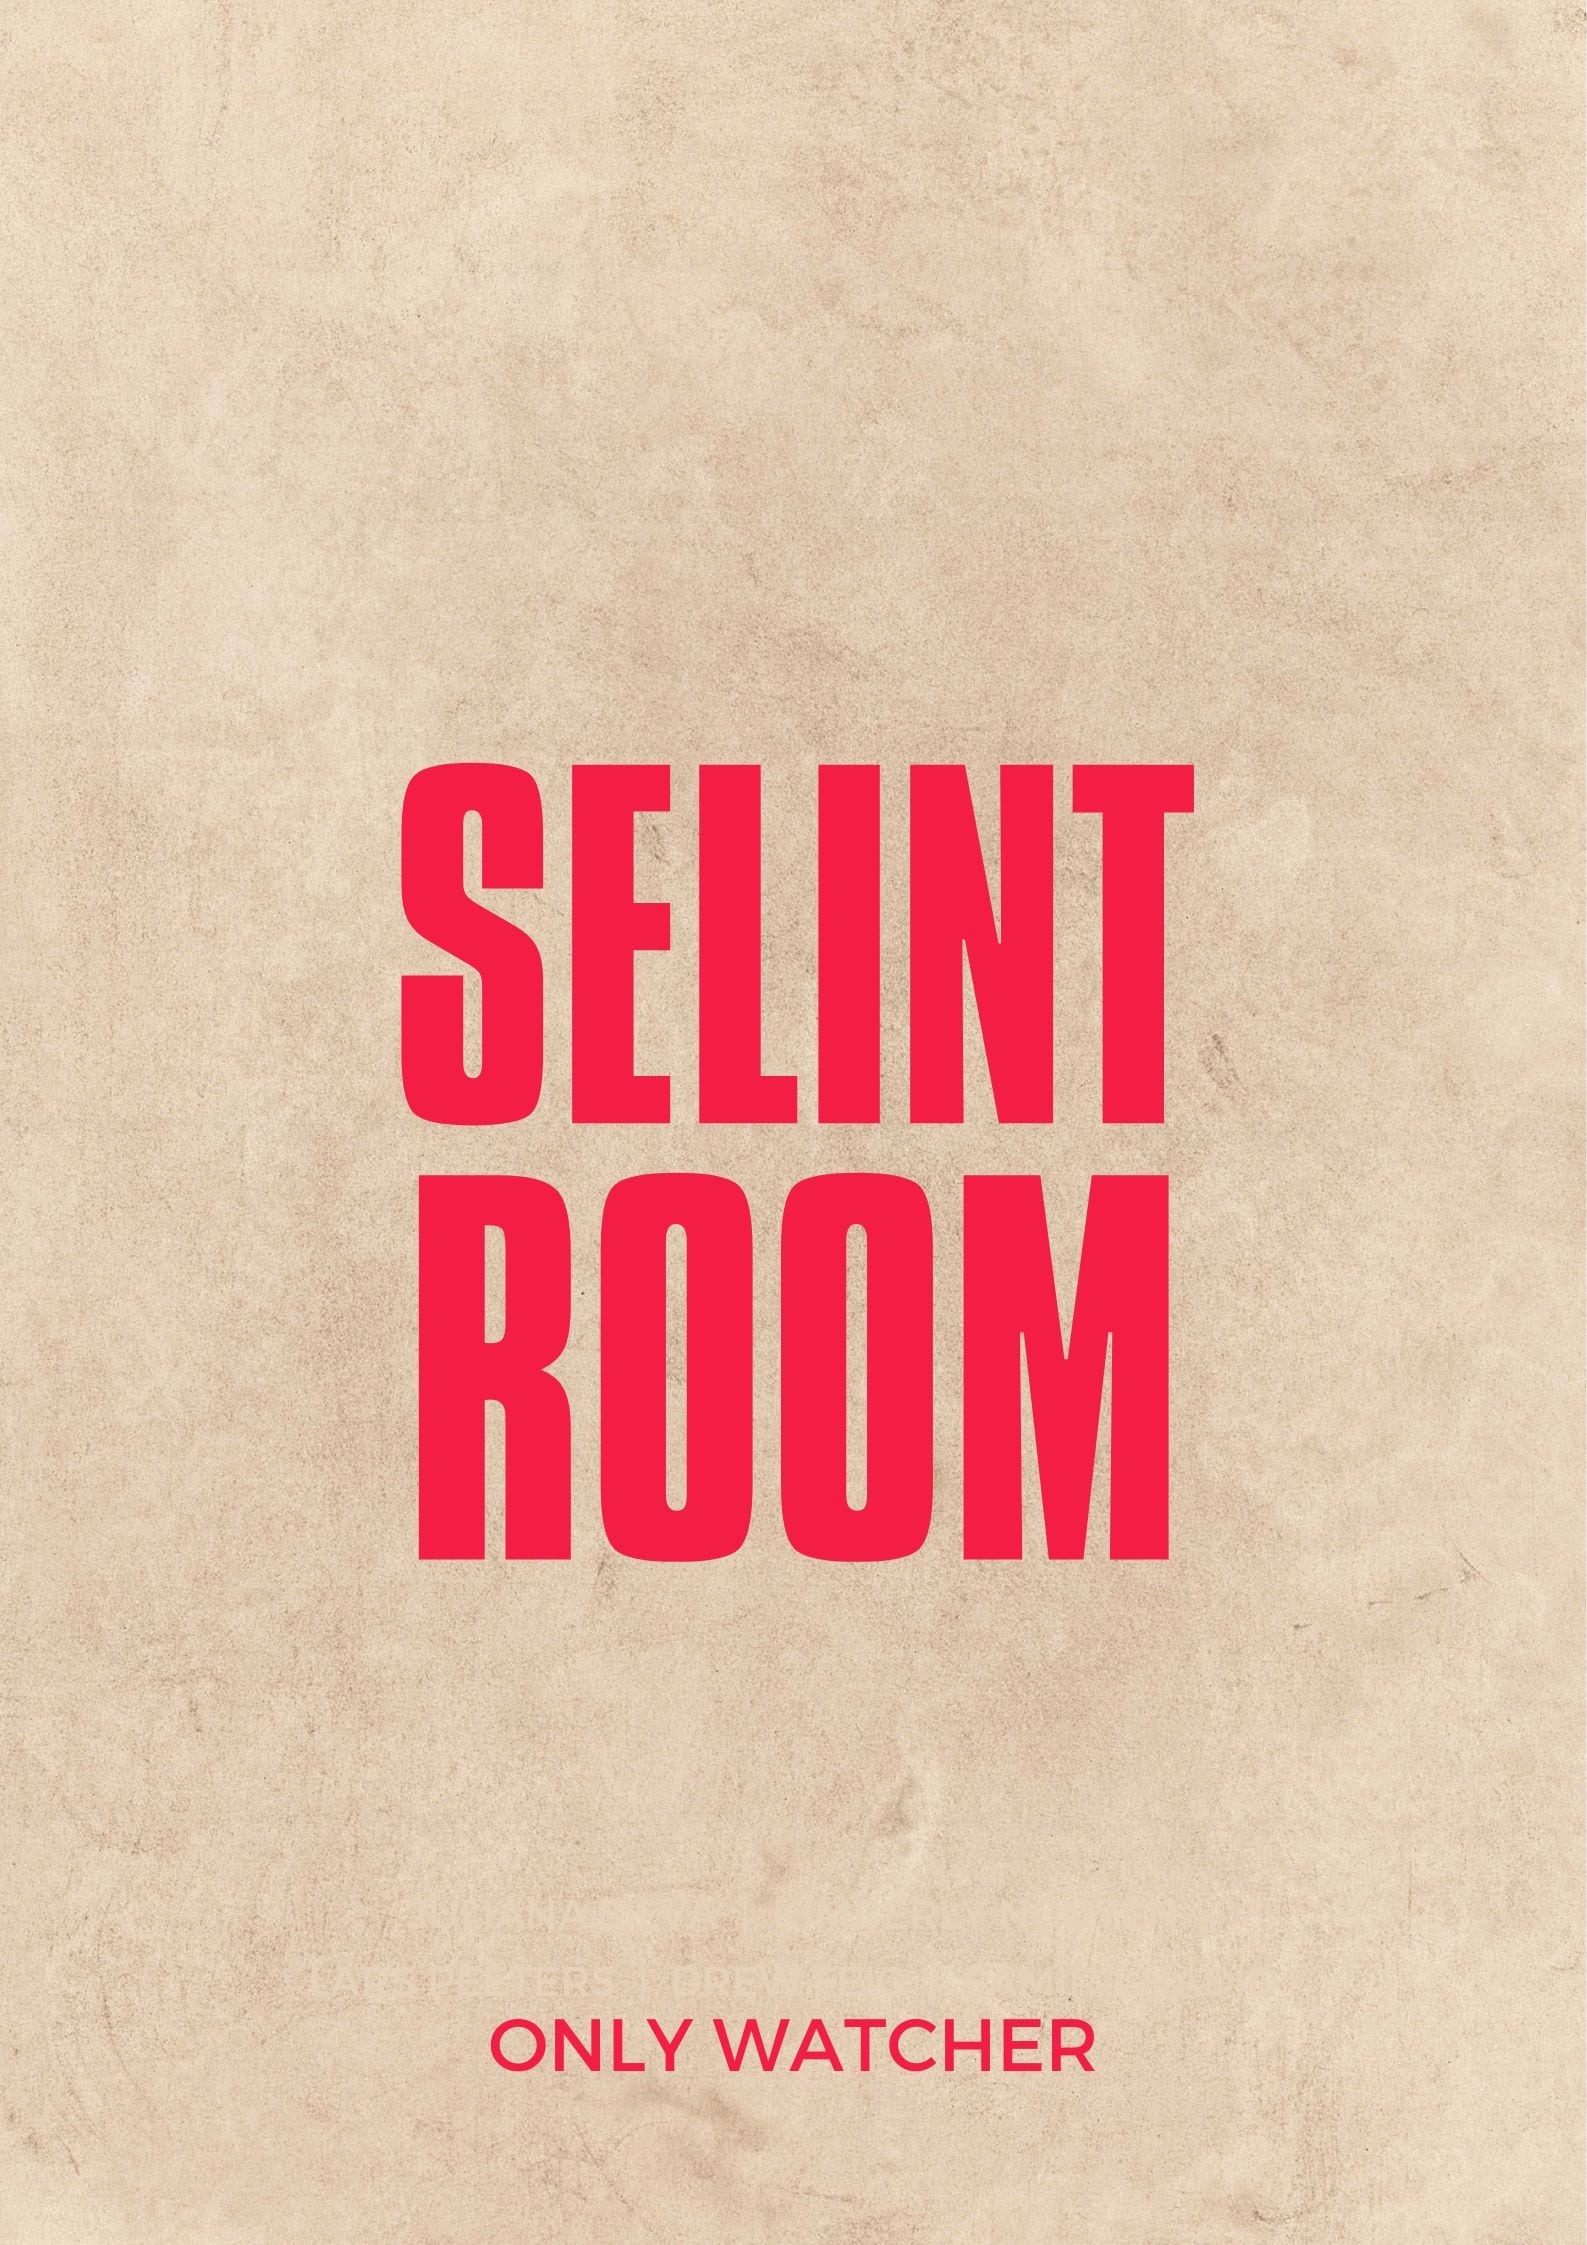 My Selint Room